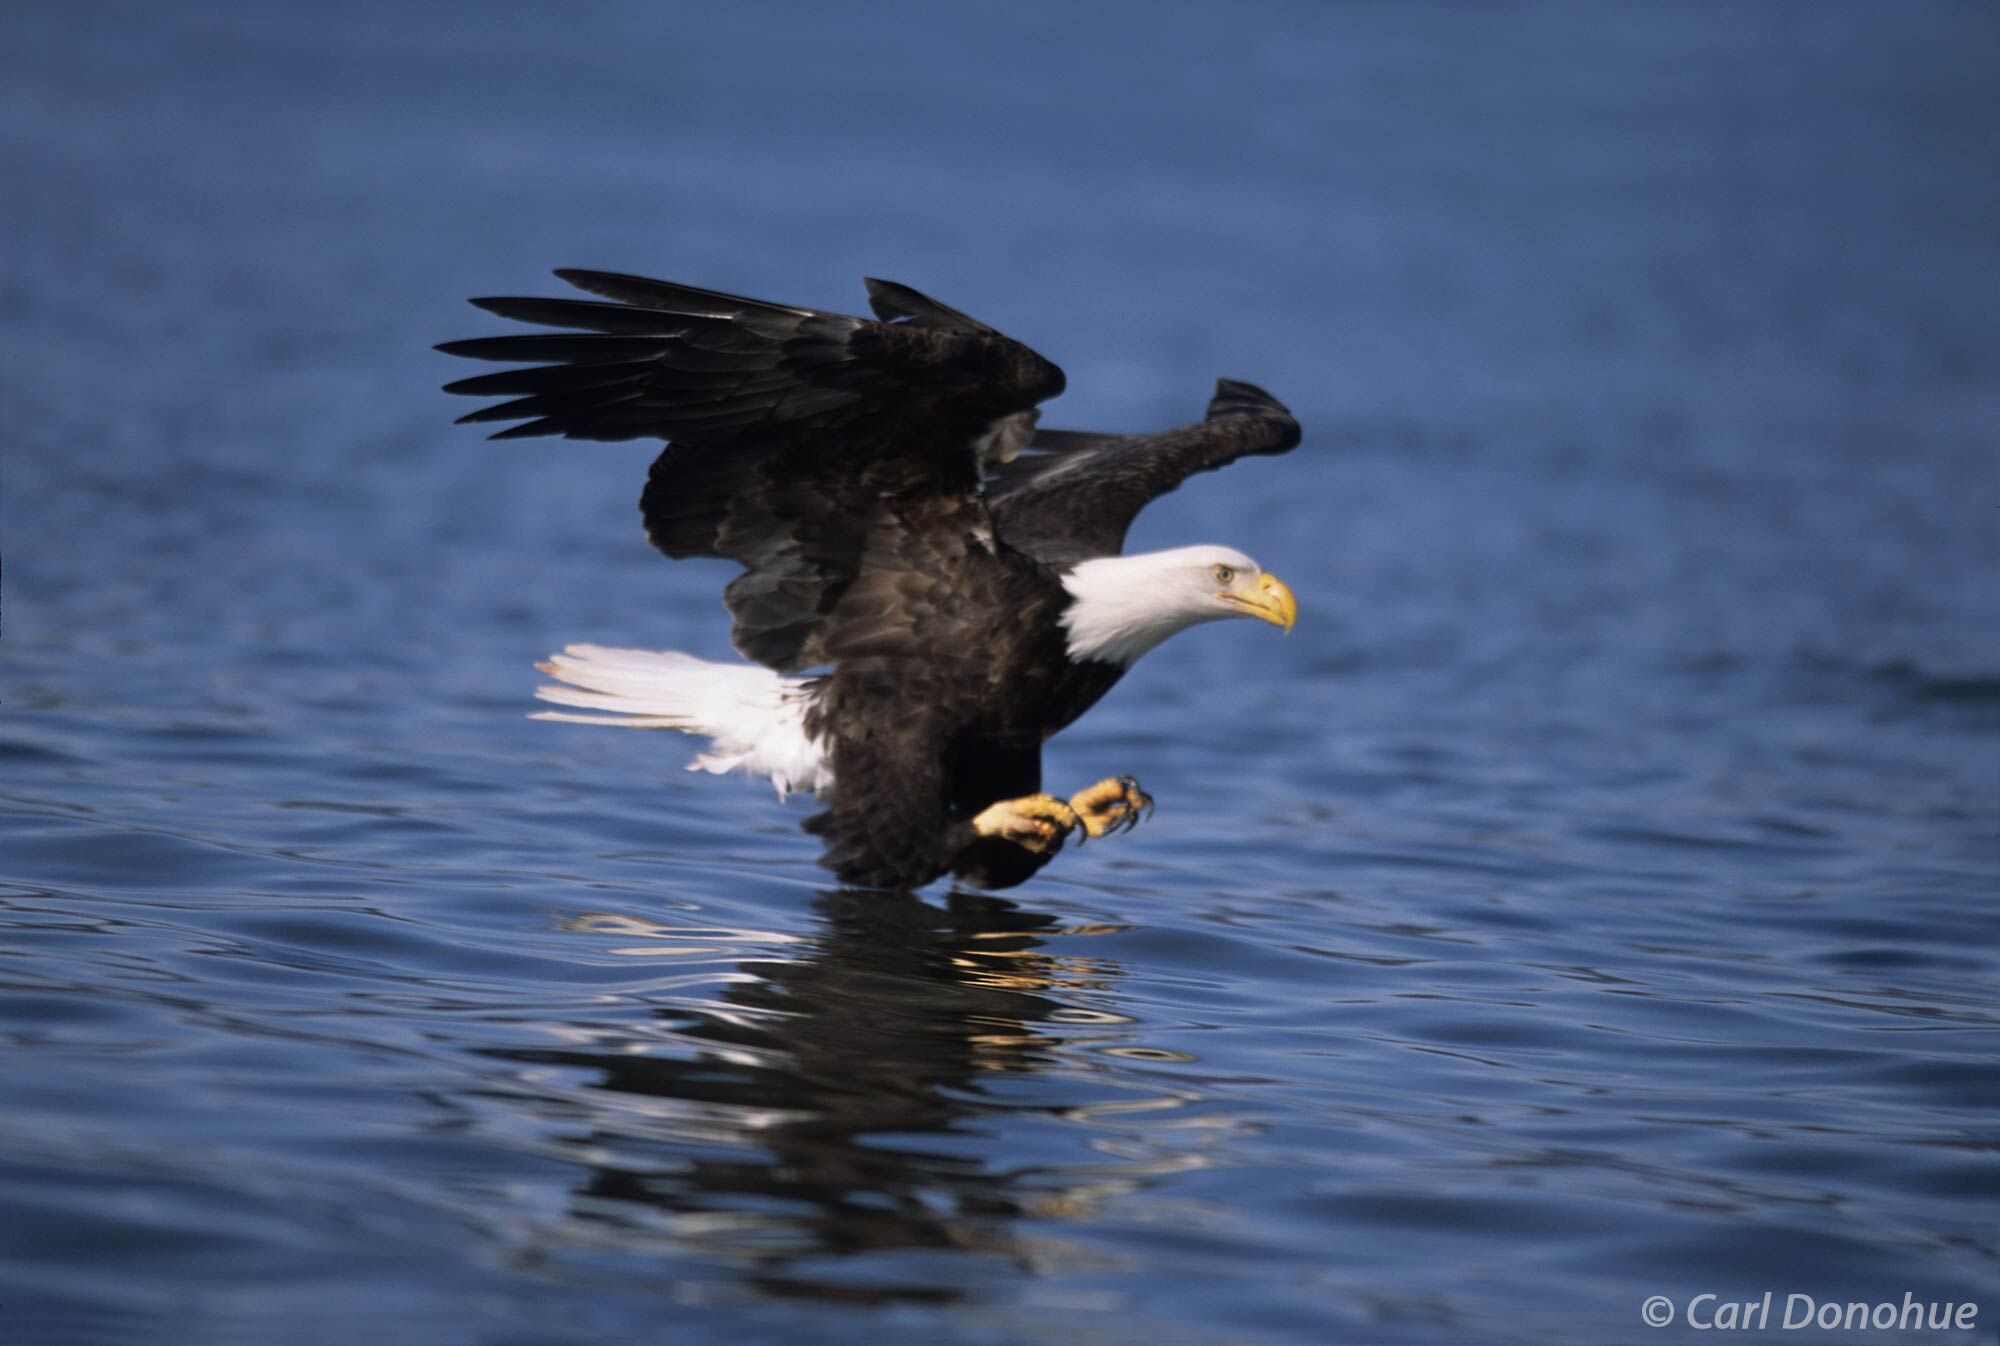 Bald eagle in flight, diving for fish, in Kachemak Bay, near Homer, Alaska. Mature bald eagle fishing in Kachemak Bay, near Homer...